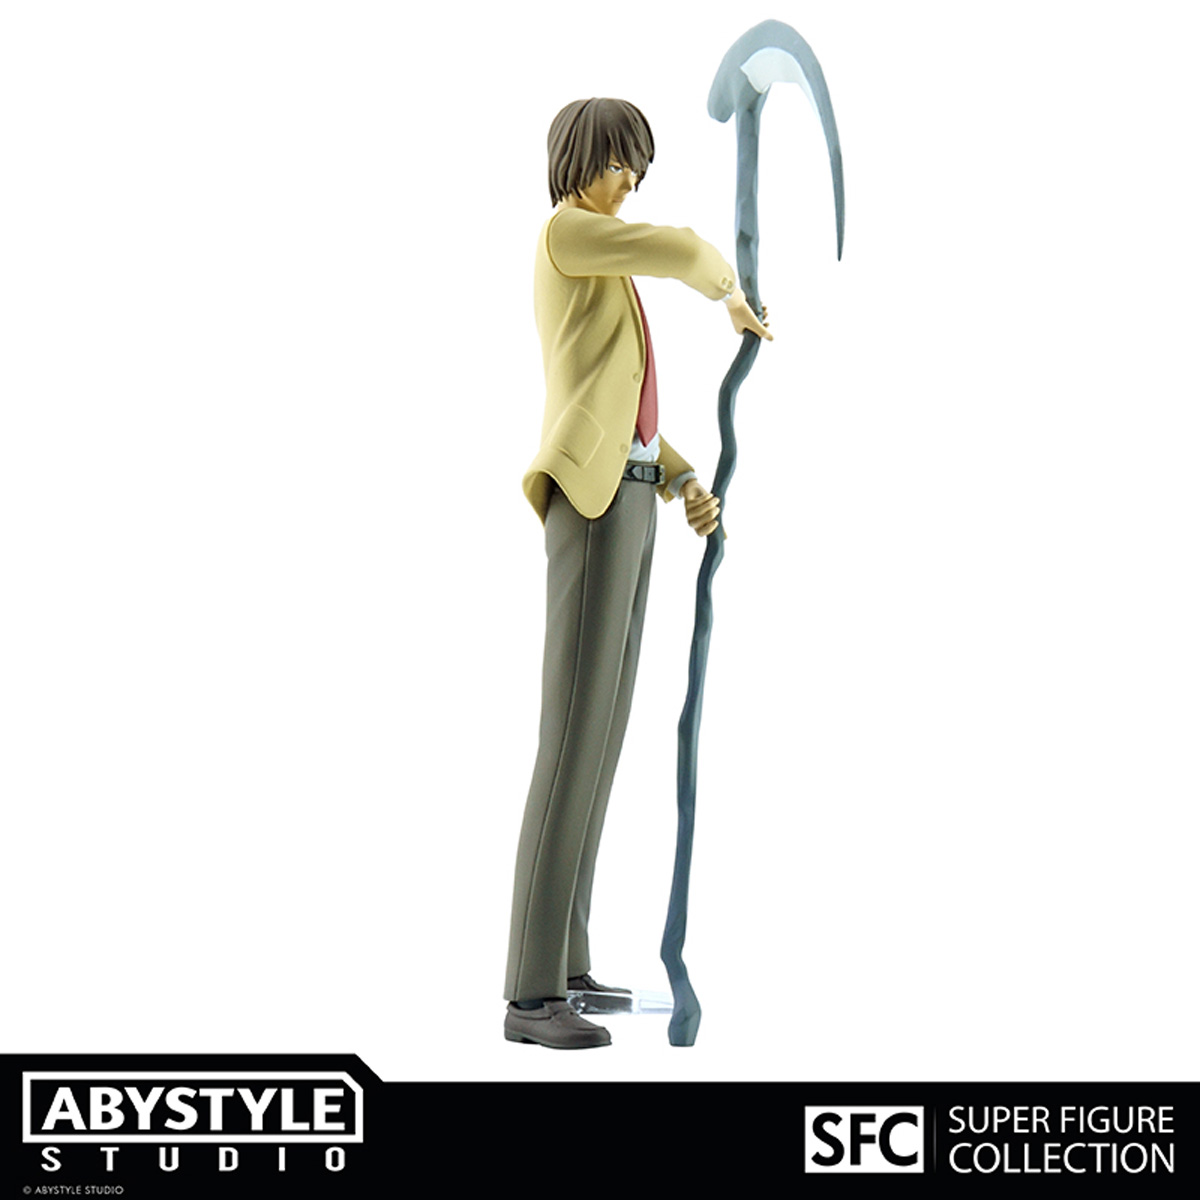 Figurine Death Note Kira (Light Yagami) 25cm - JutsuShop